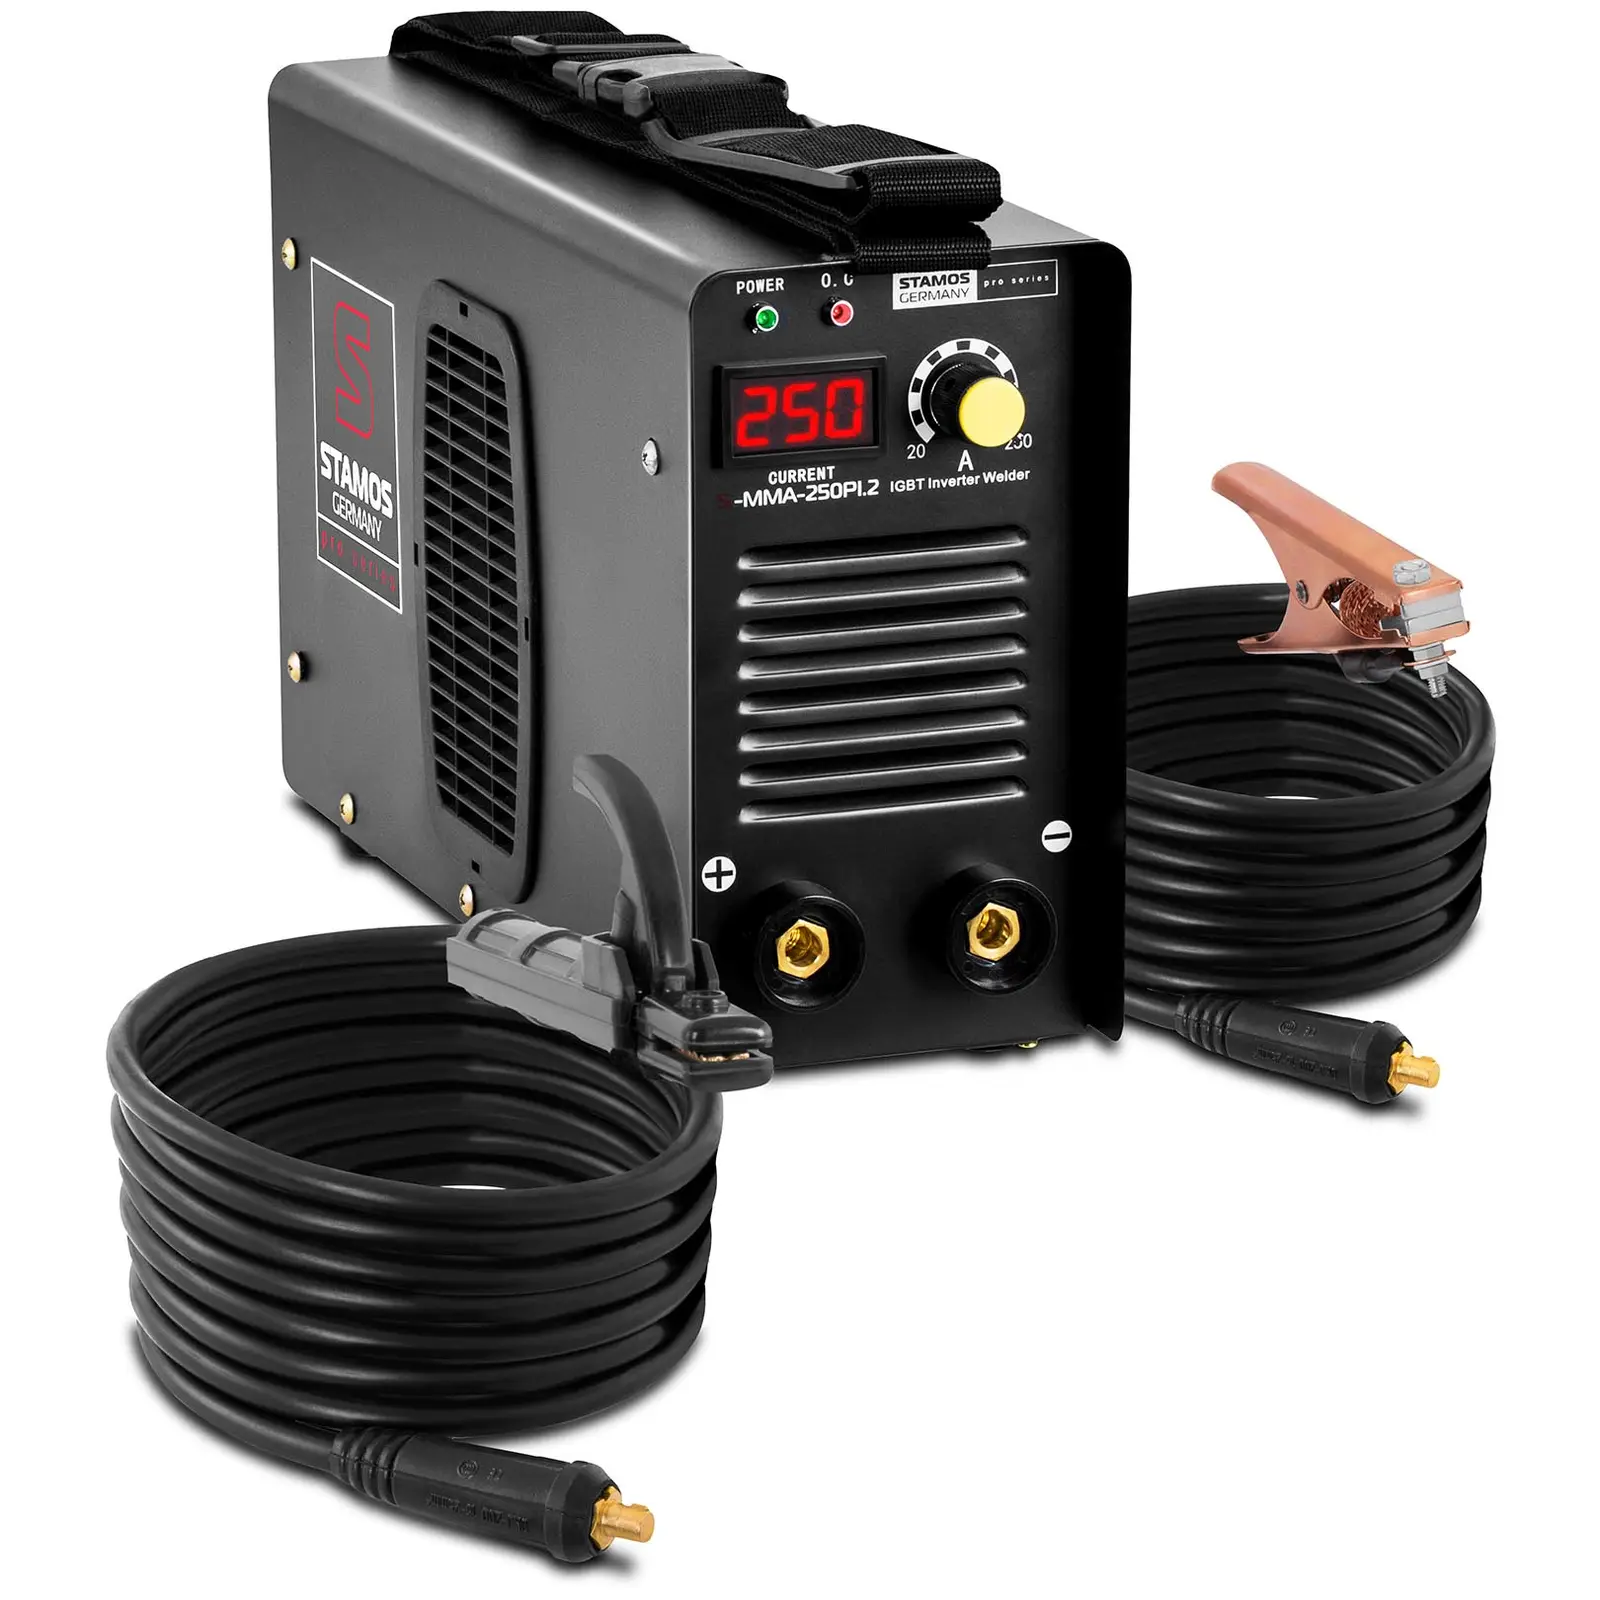 Електрозаварчик - 250 A - 8 m кабел - Hot Start - PRO